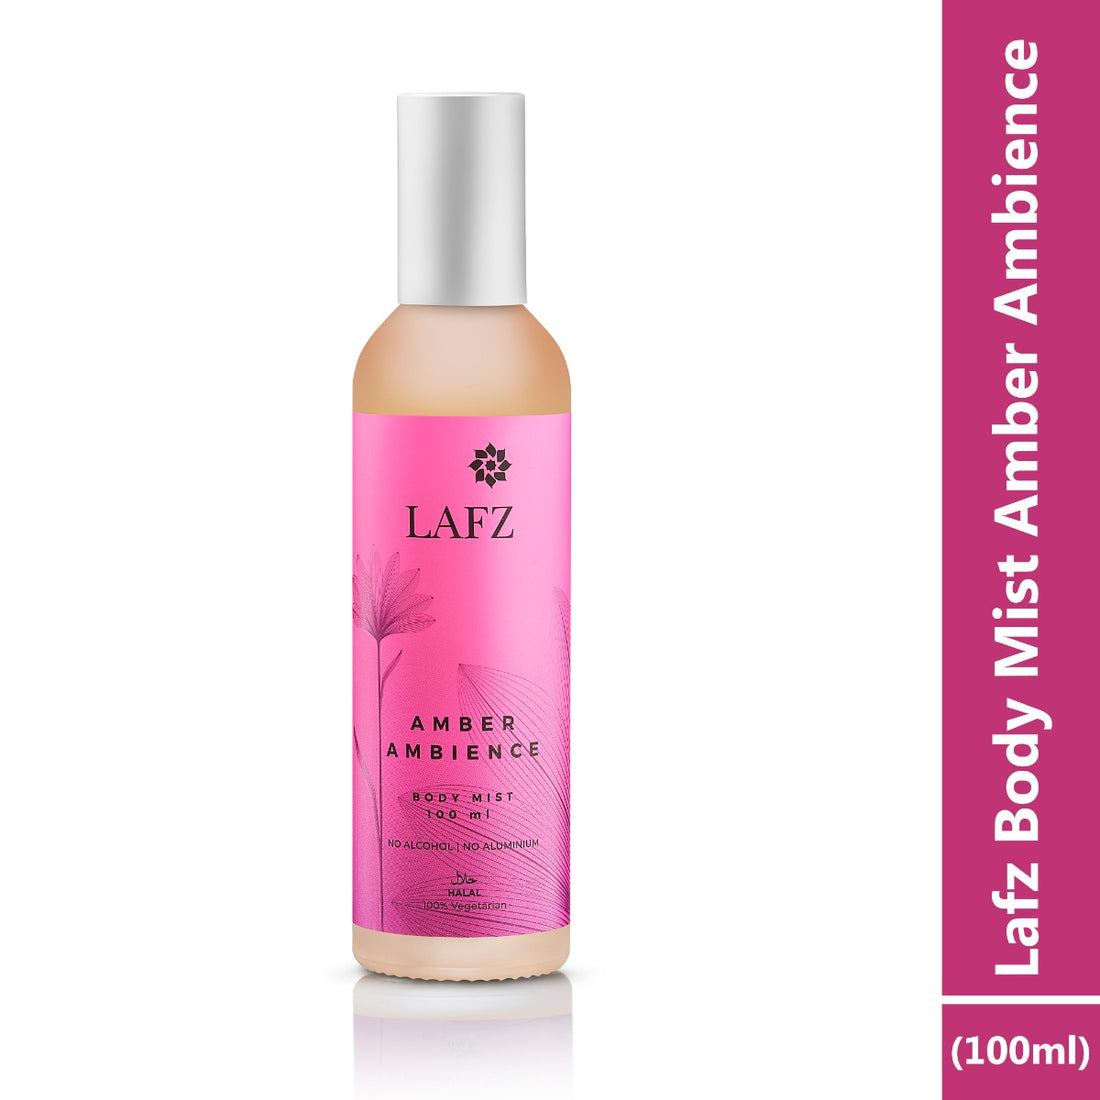 Lafz Body Mist Amber Ambience (100ml)-Alcohol free